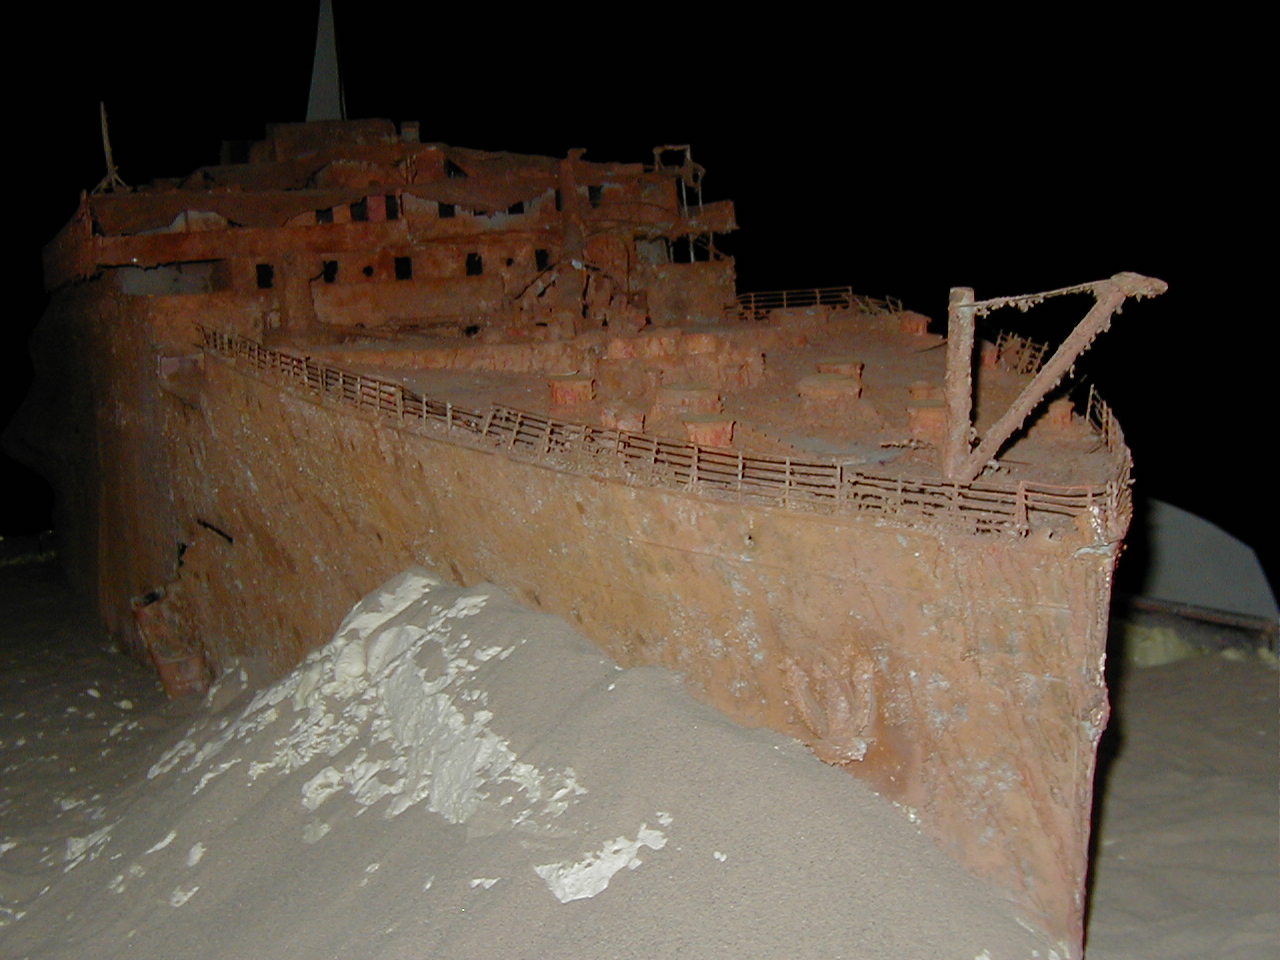 http://1.bp.blogspot.com/-dZ7j2H5Gg-I/TyY-T9IWcLI/AAAAAAAAAH8/DOeJMdv1Aao/s1600/Titanic+wreck.jpg